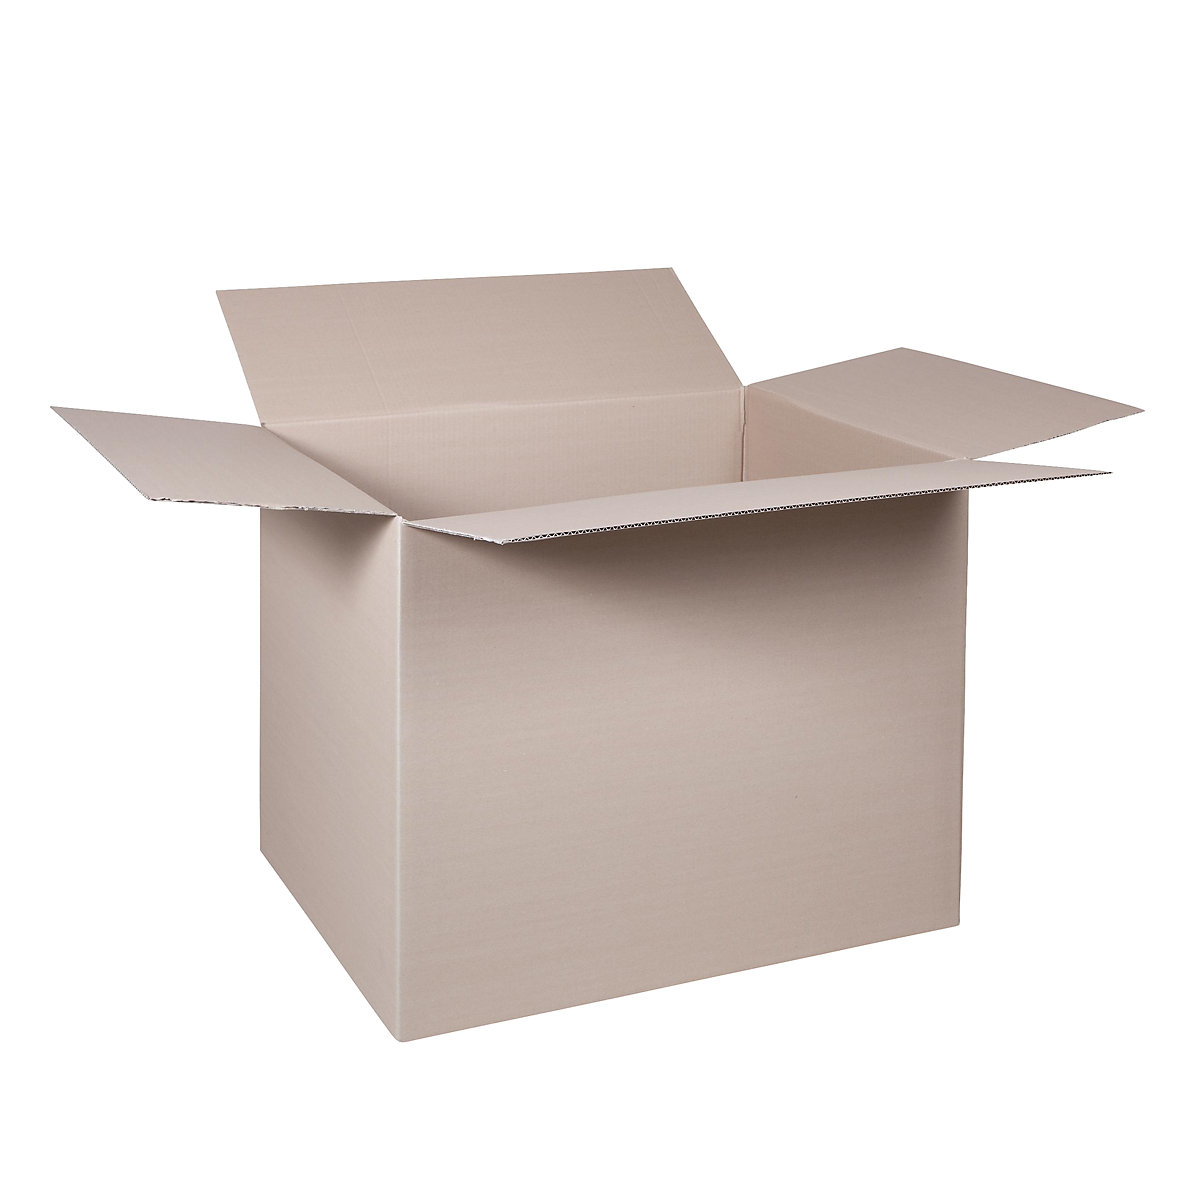 Folding cardboard box, FEFCO 0201, made of single fluted cardboard, internal dimensions 780 x 580 x 600 mm, pack of 100-332